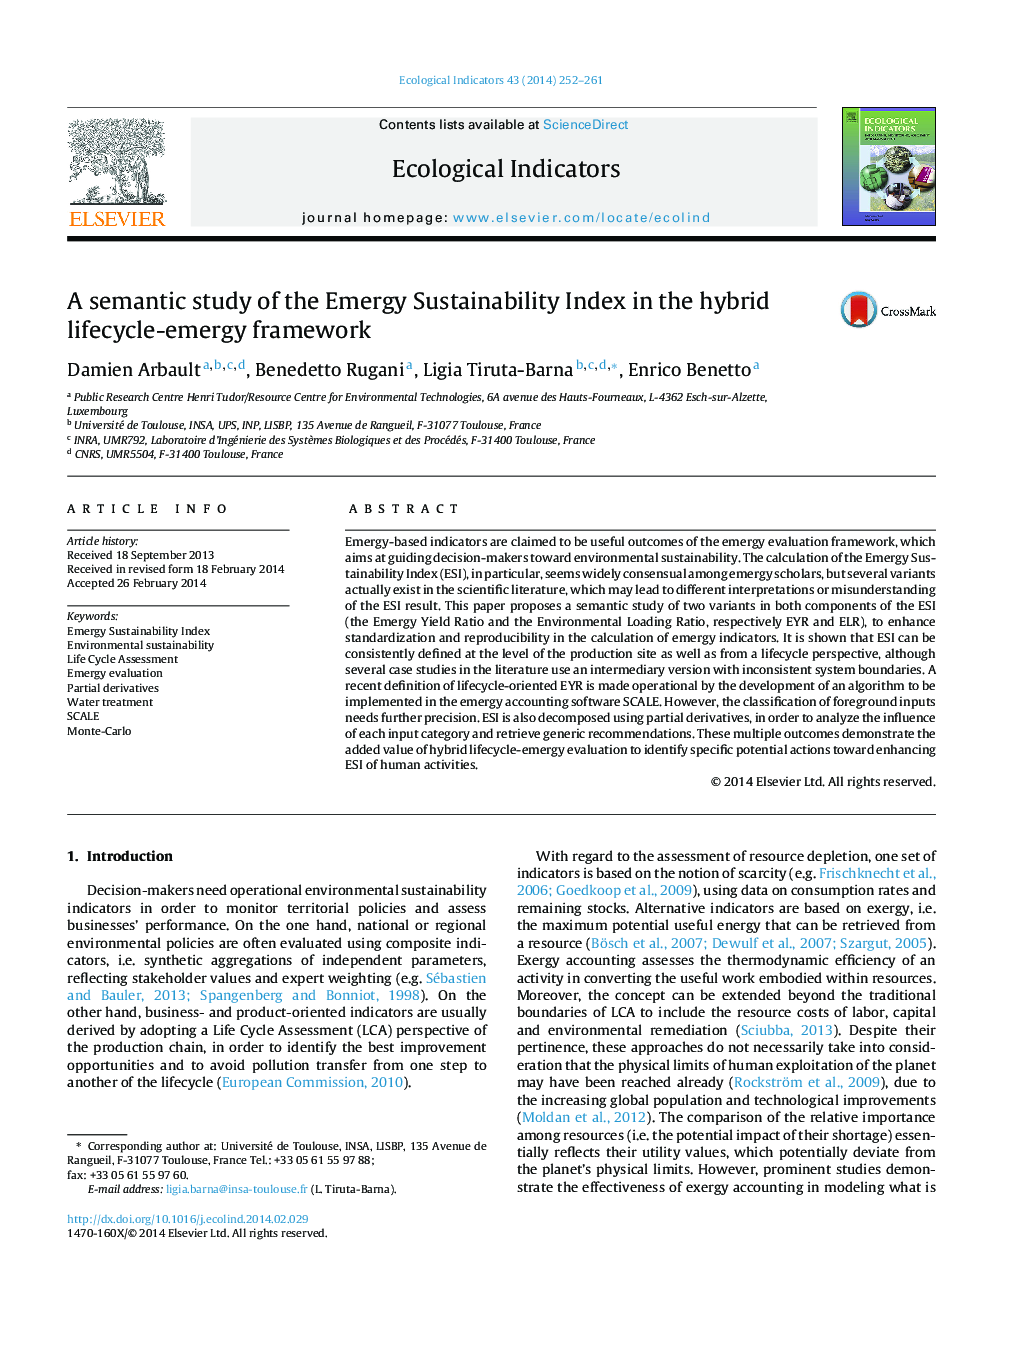 A semantic study of the Emergy Sustainability Index in the hybrid lifecycle-emergy framework